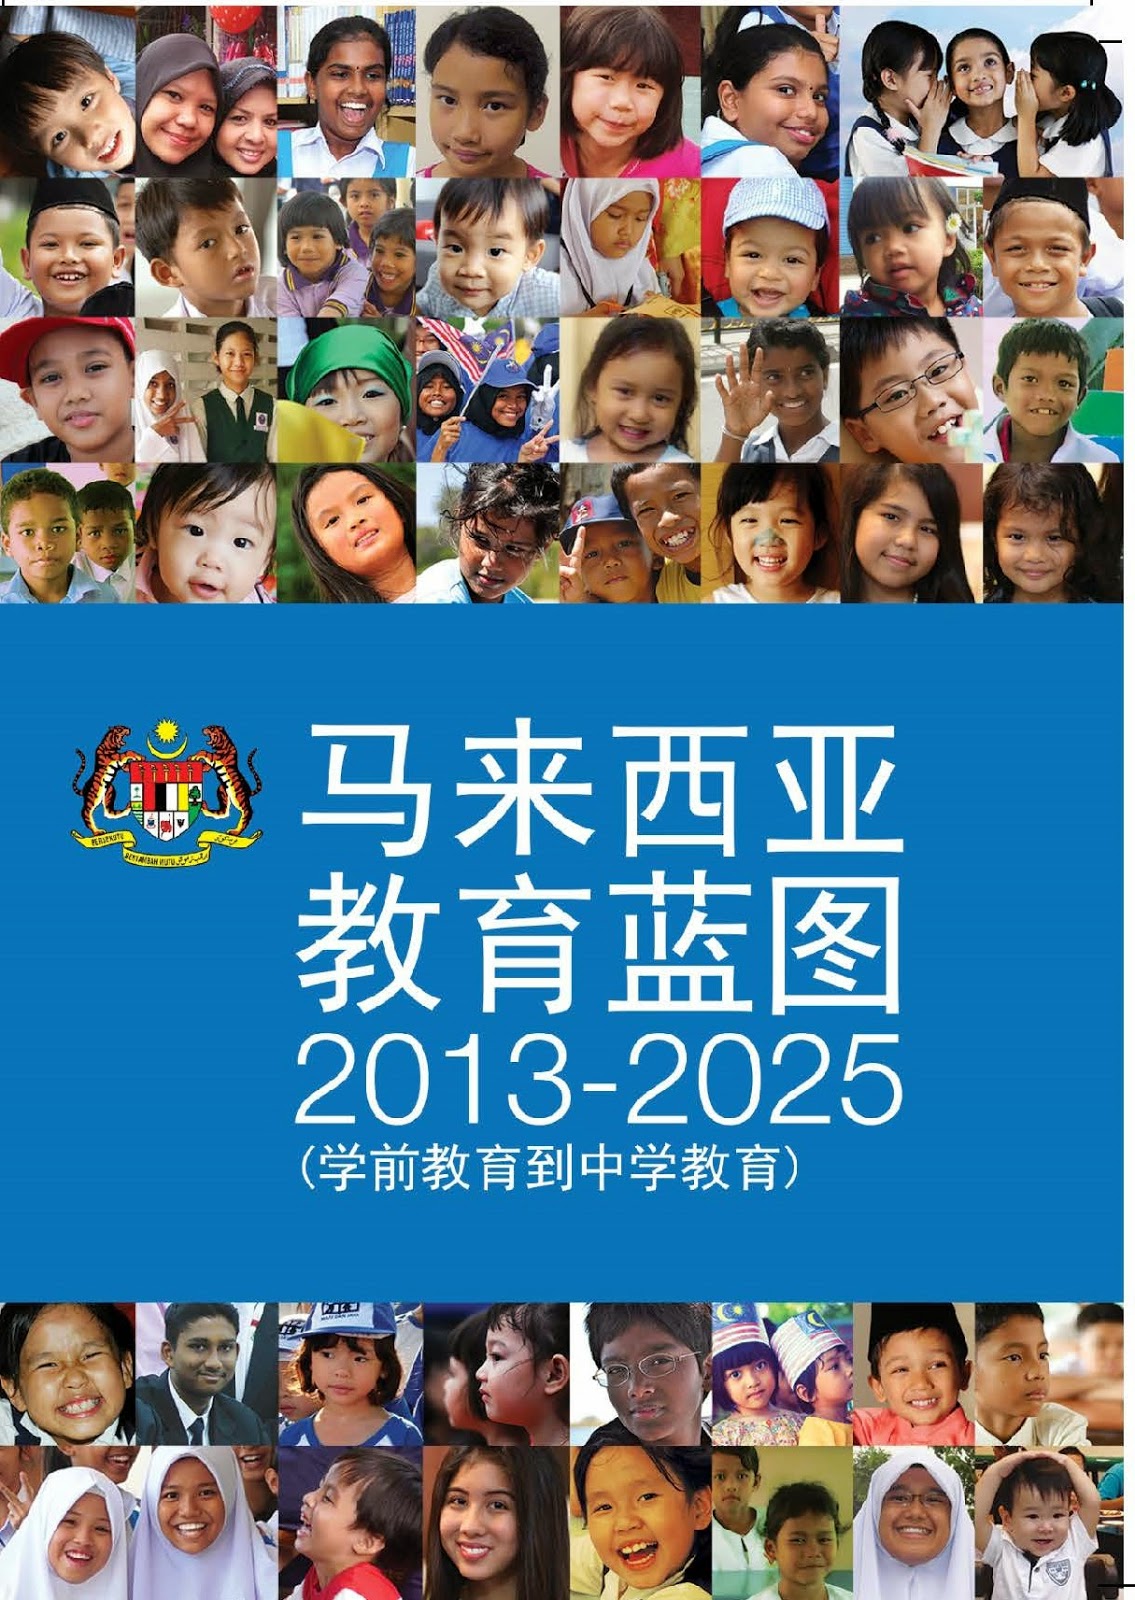 pelan pembangunan pendidikan malaysia pdf